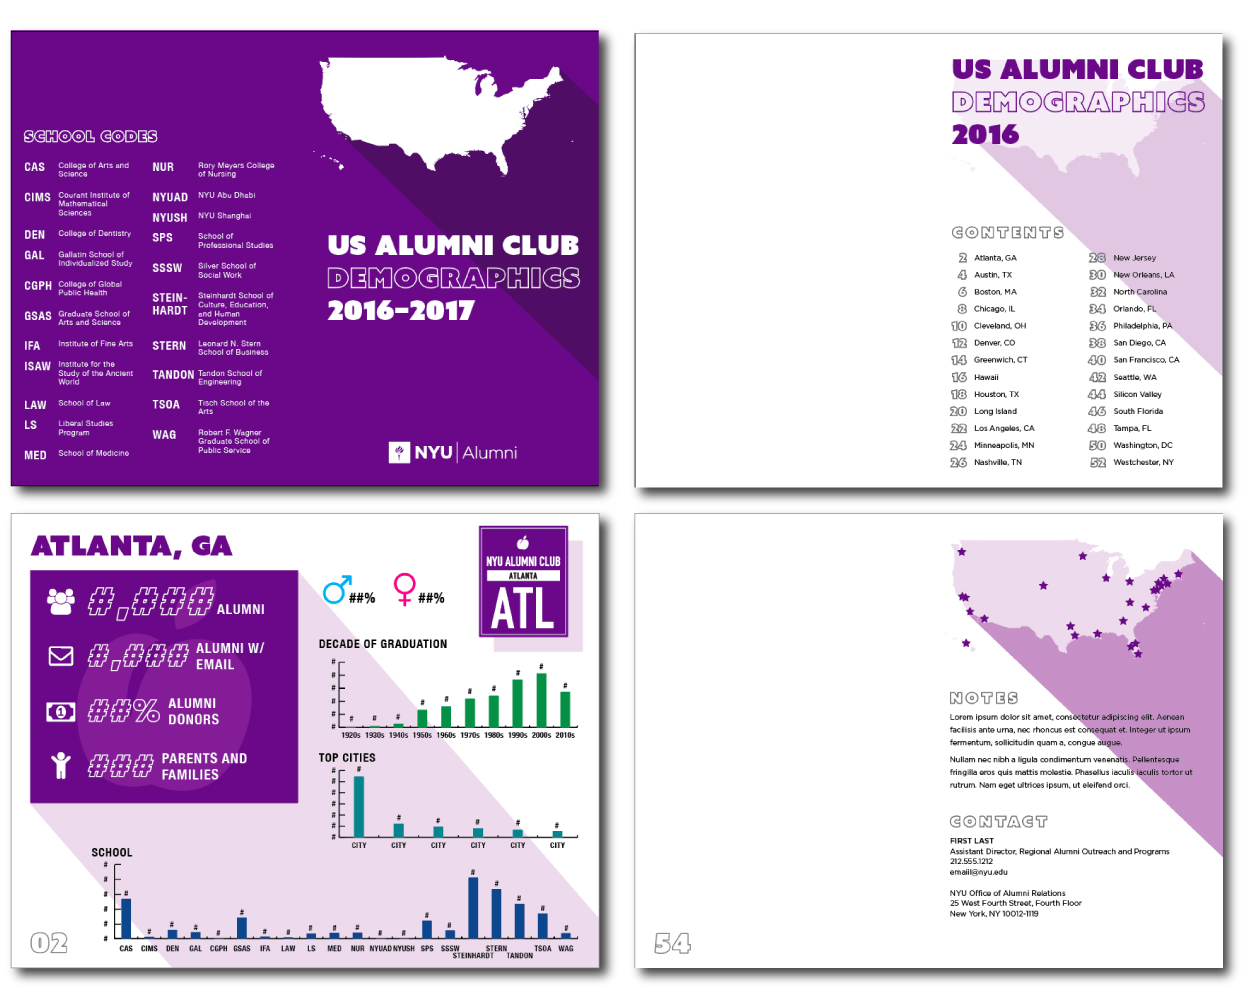 NYU Alumni Clubs Demographics Report Booklet